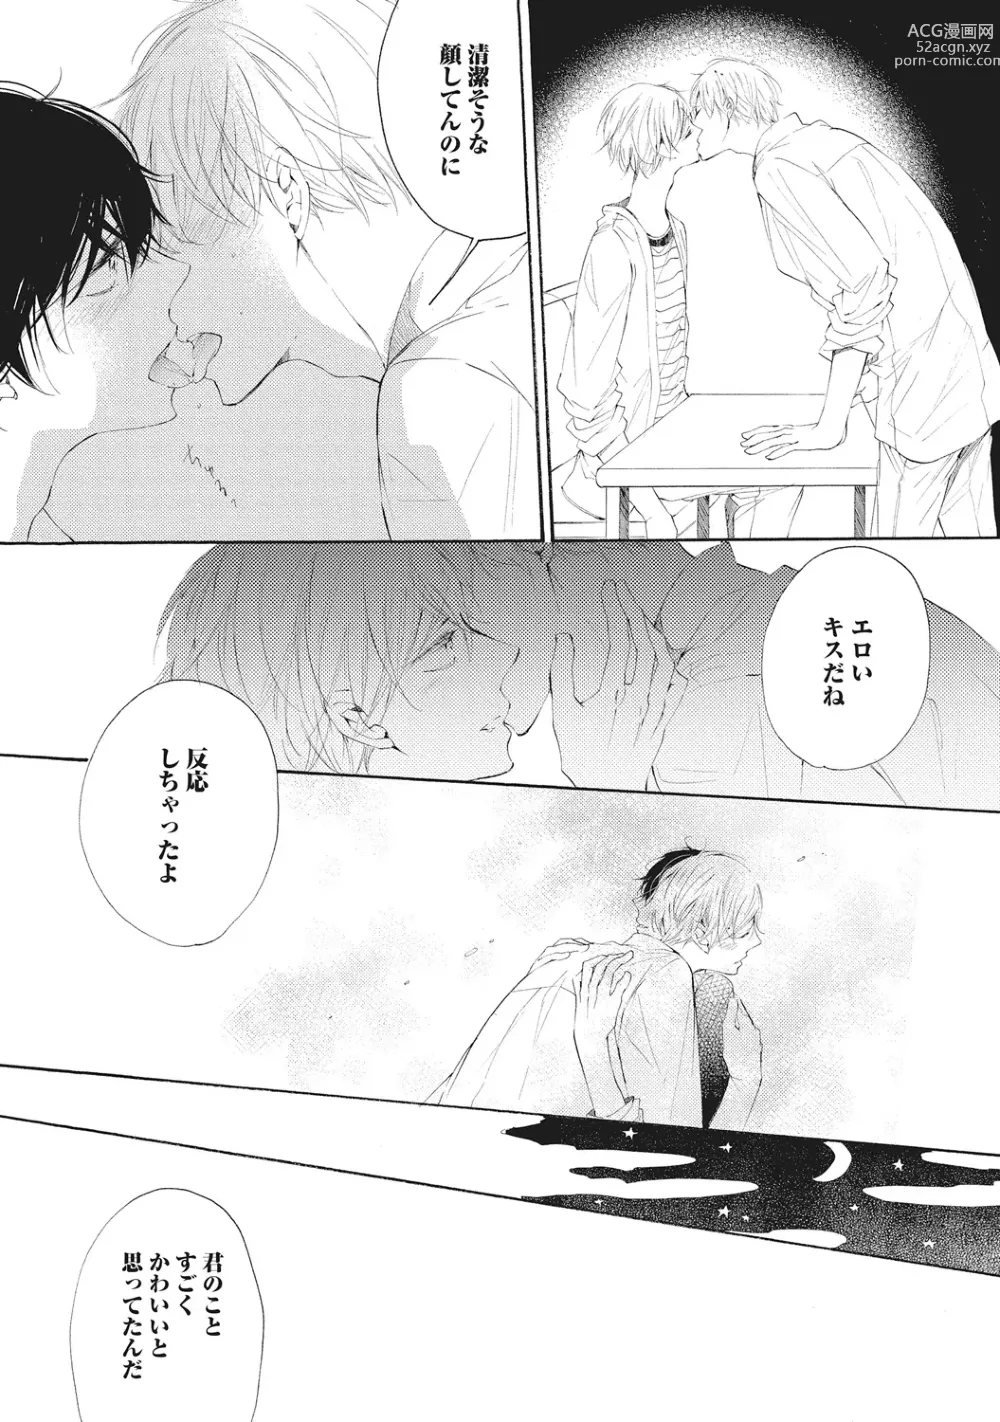 Page 183 of manga Kateinai Seiai